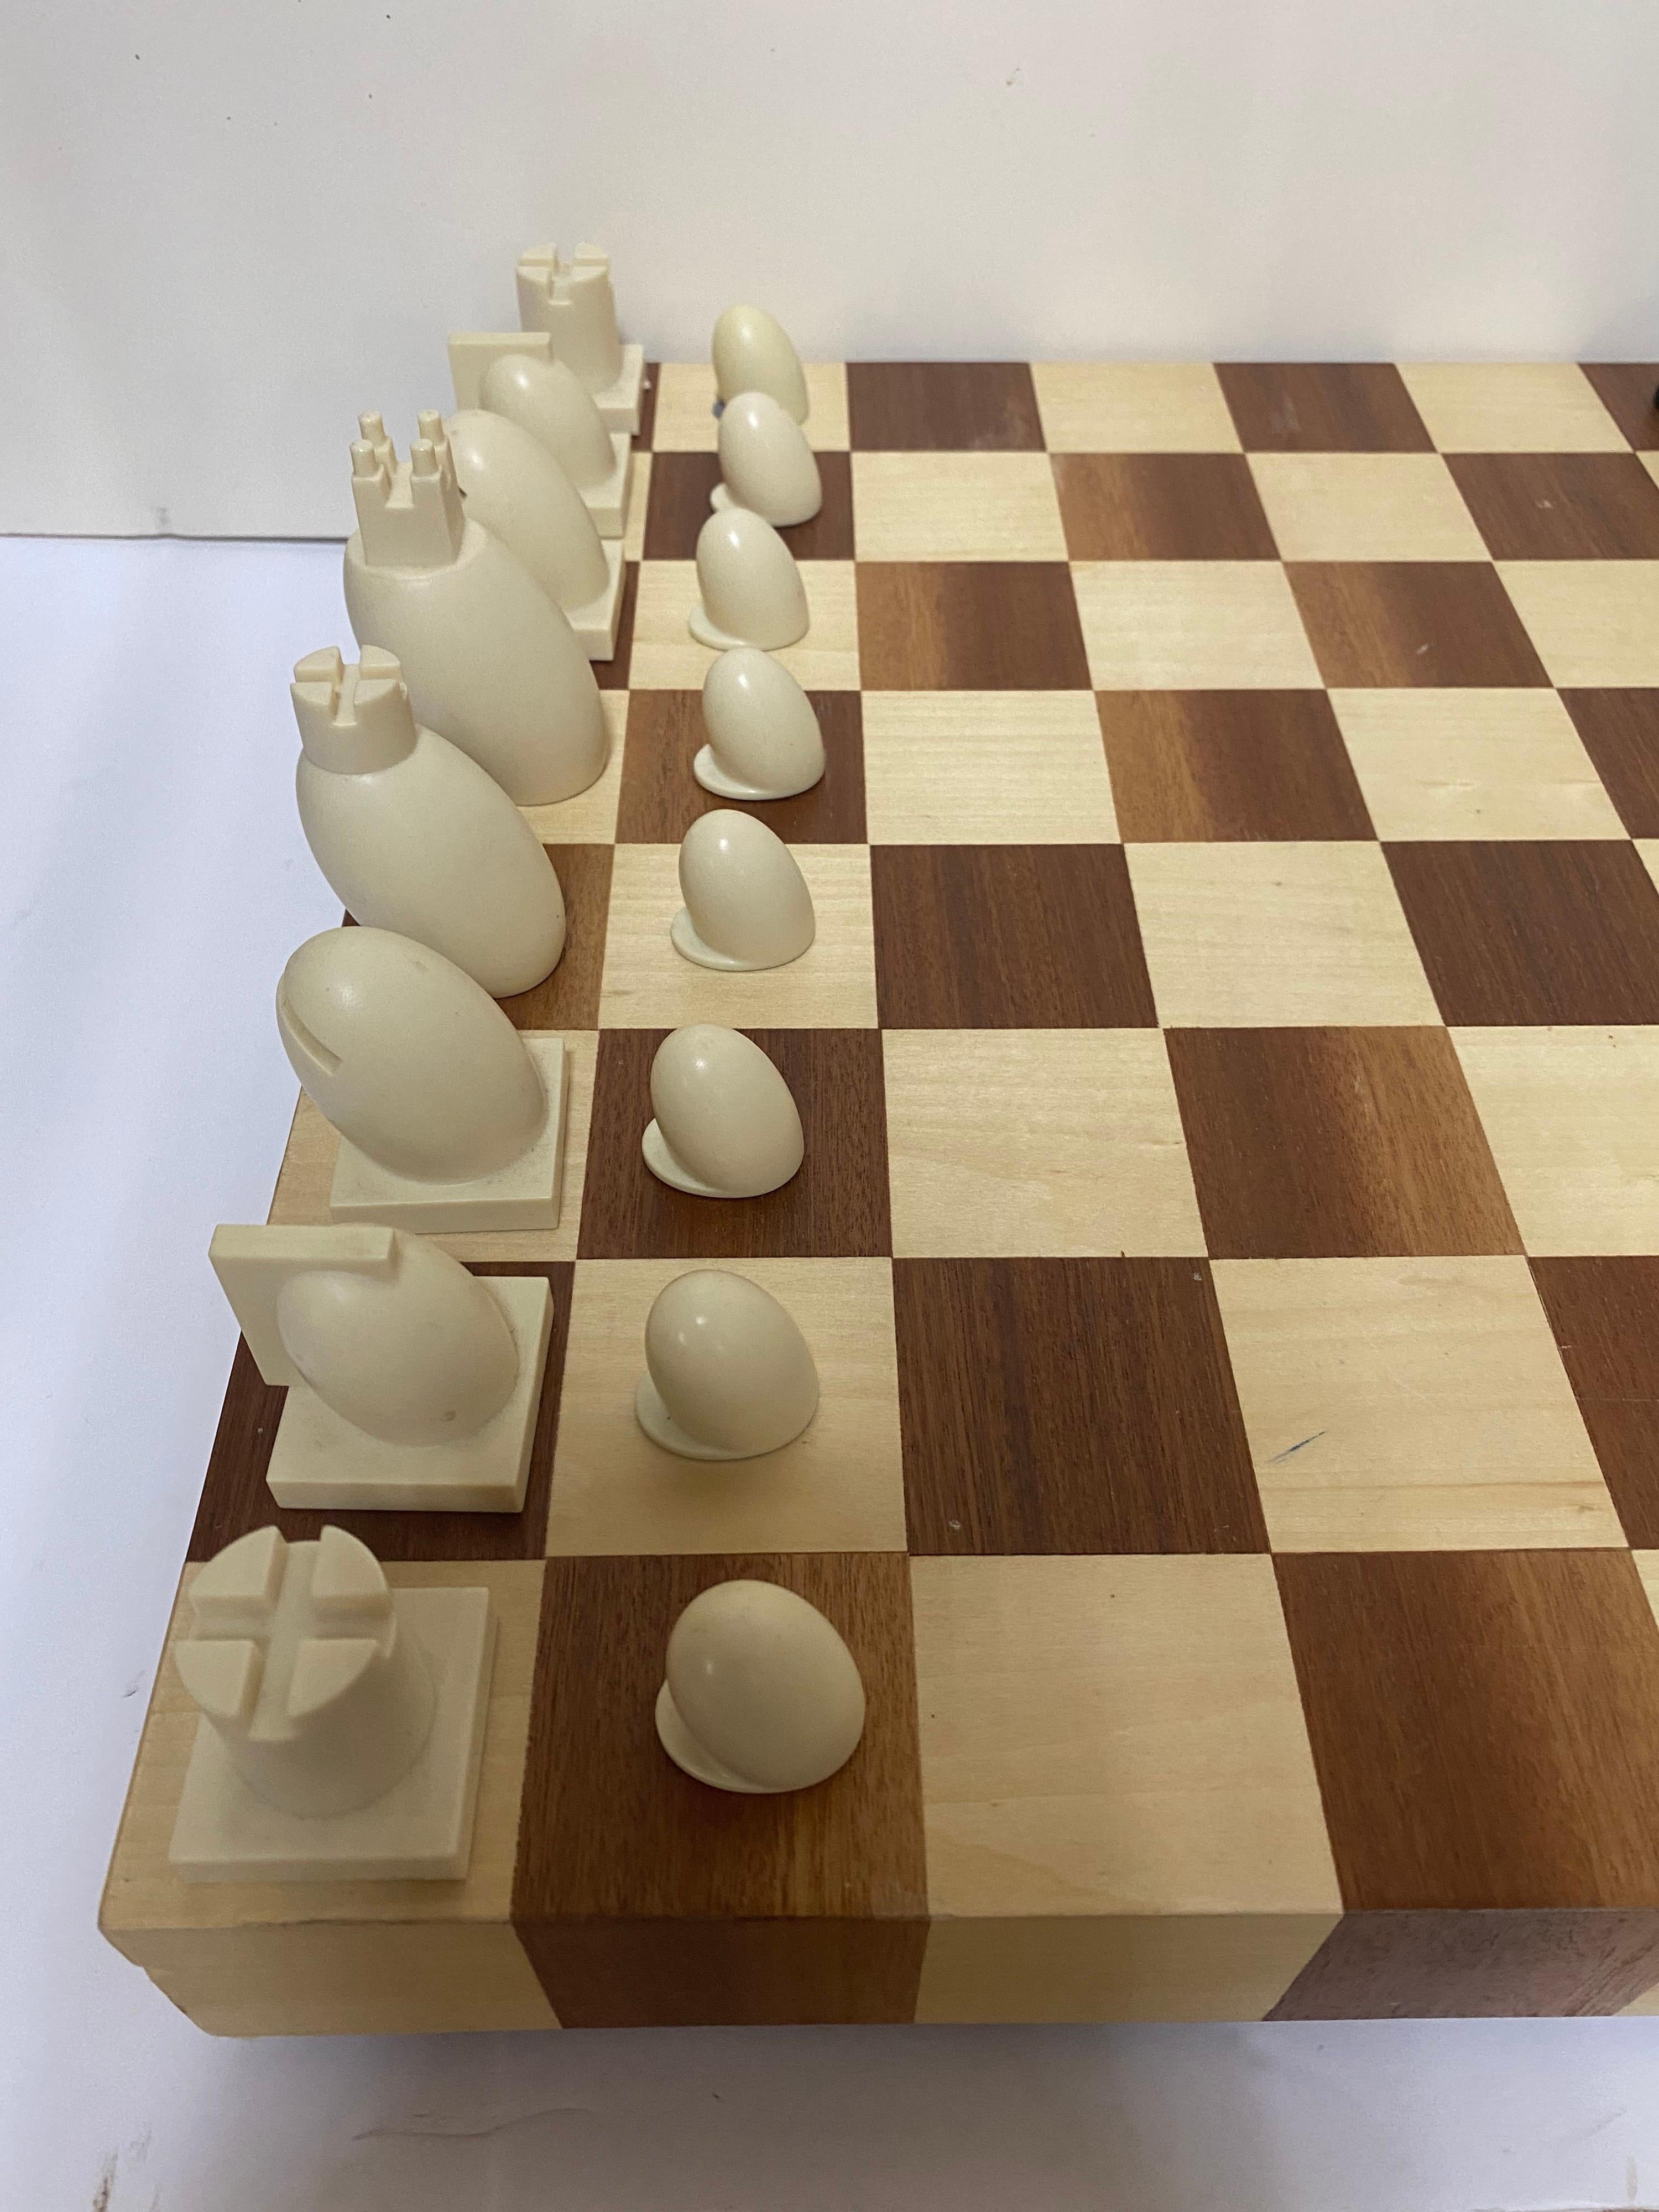 Modern Michael Graves Two Tone Chess & Checkers Set, circa 2000